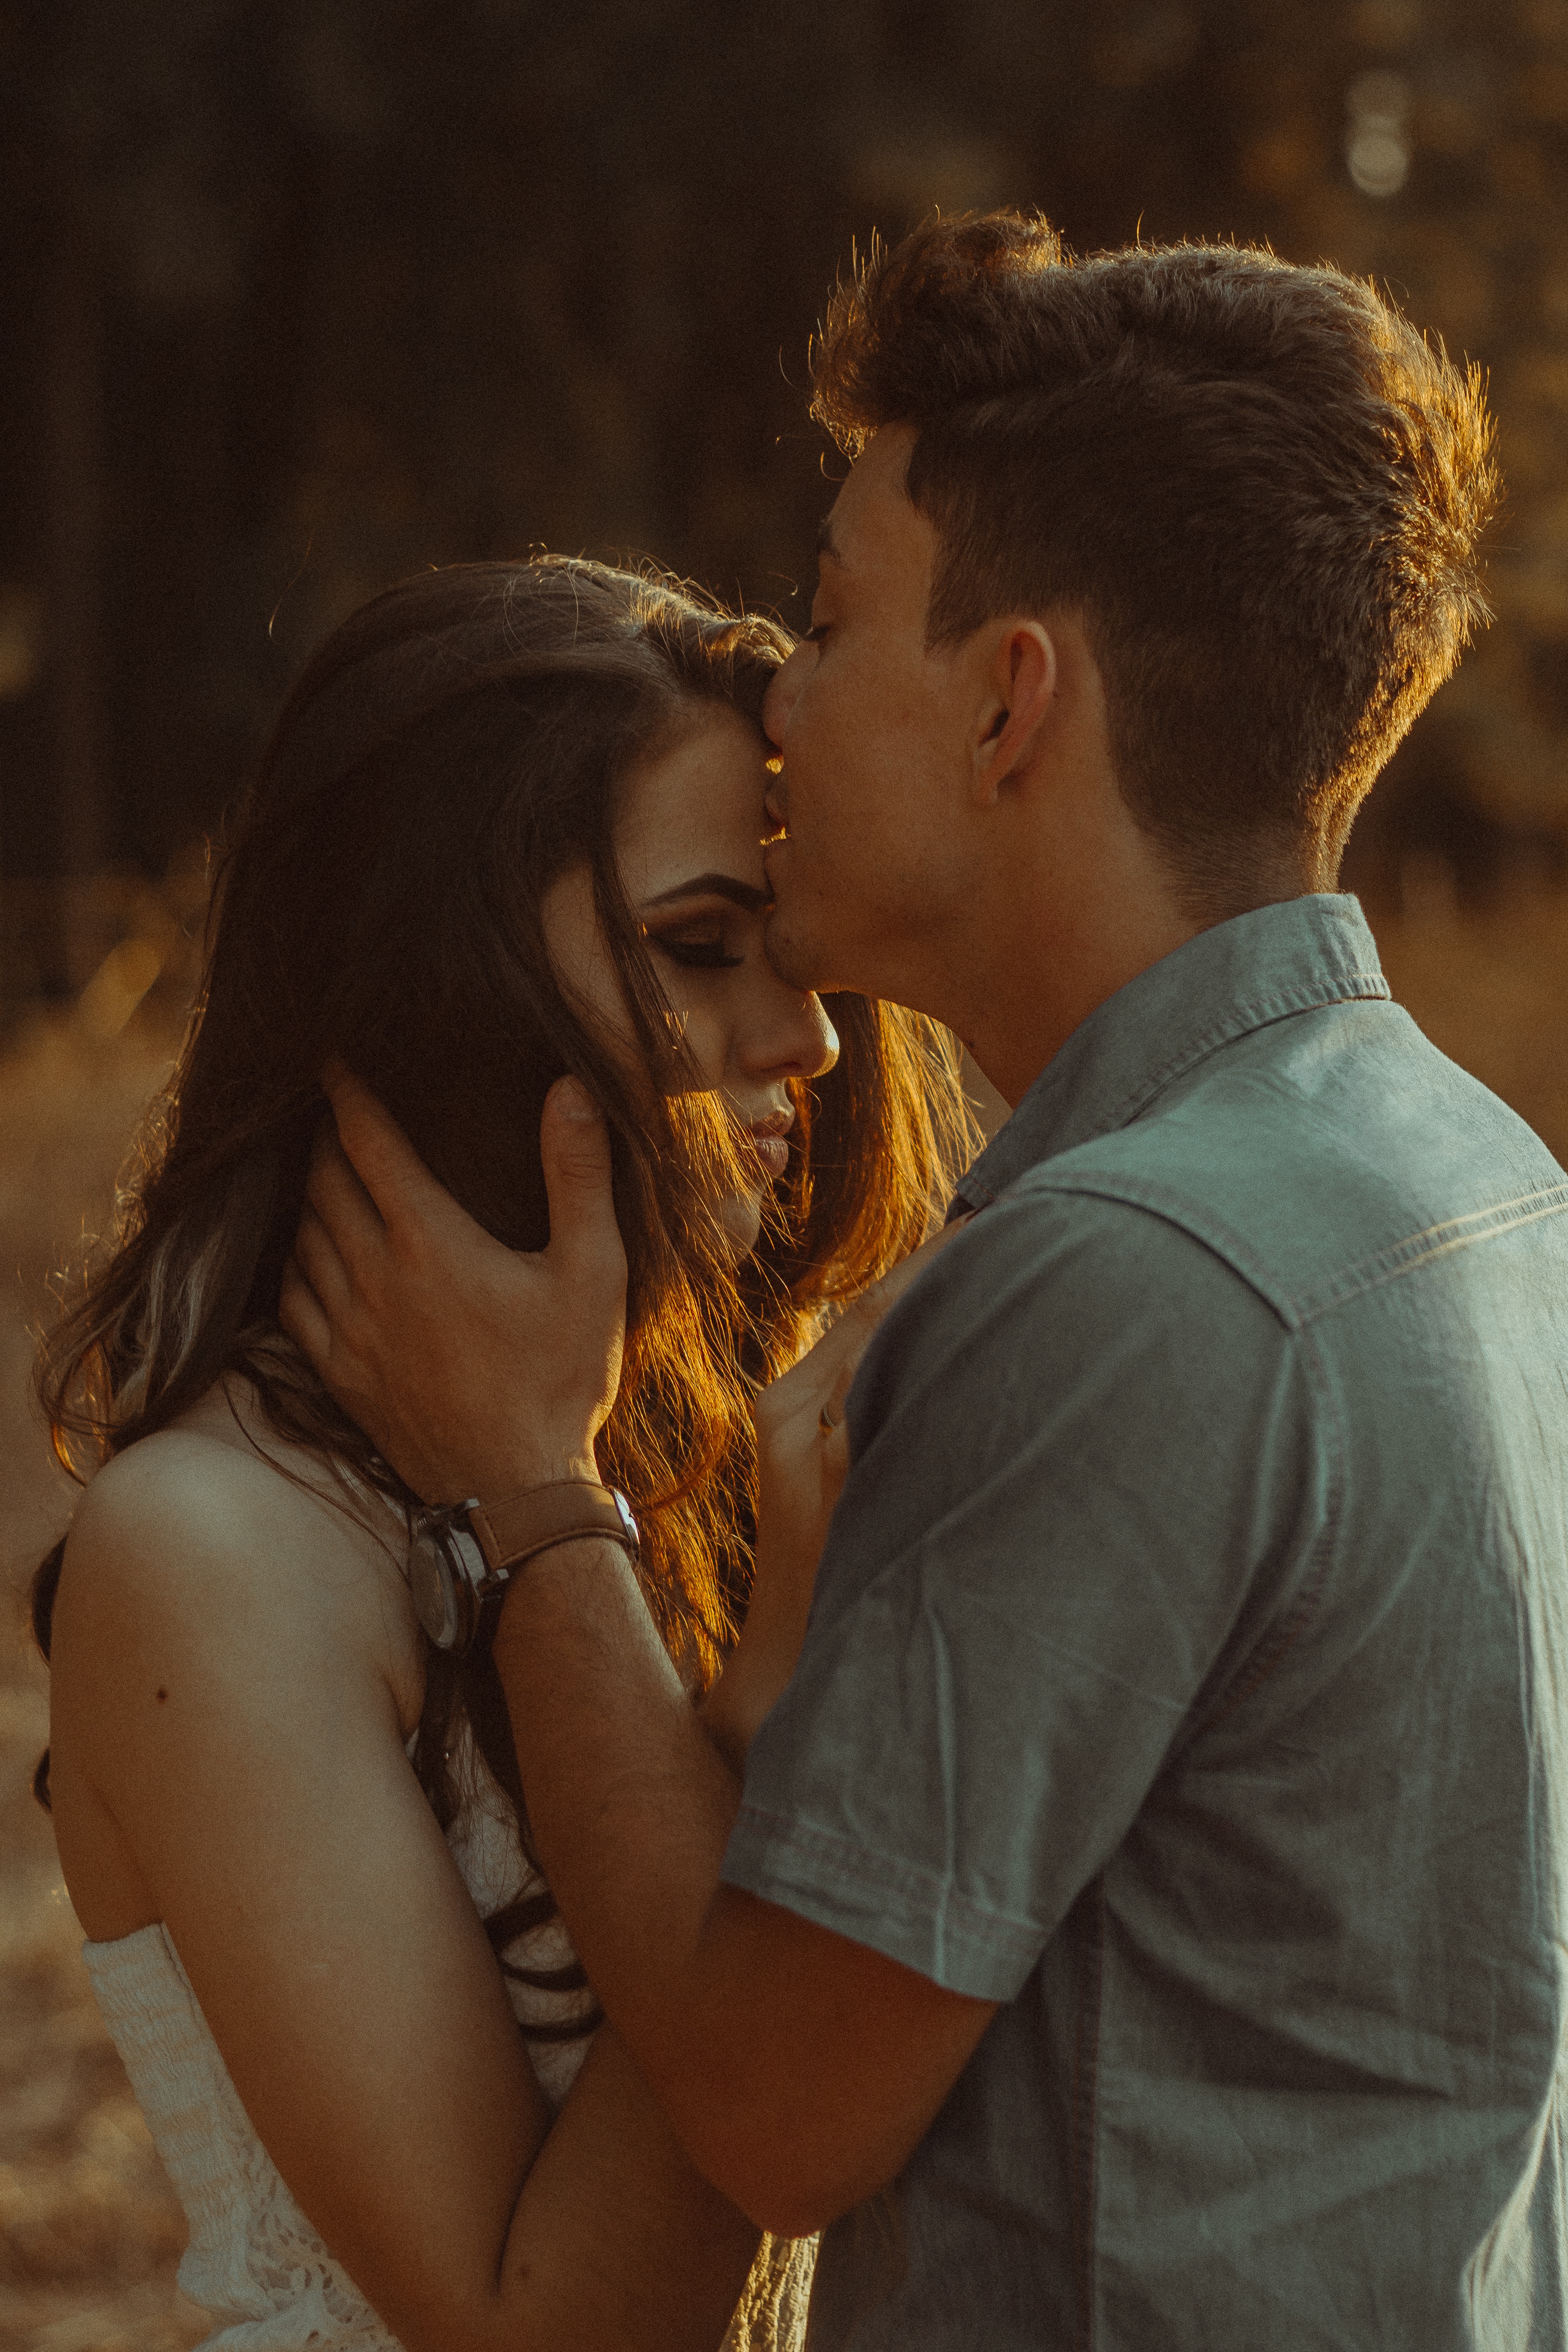 A man kissing his partner's forhead. | Source: Unsplash